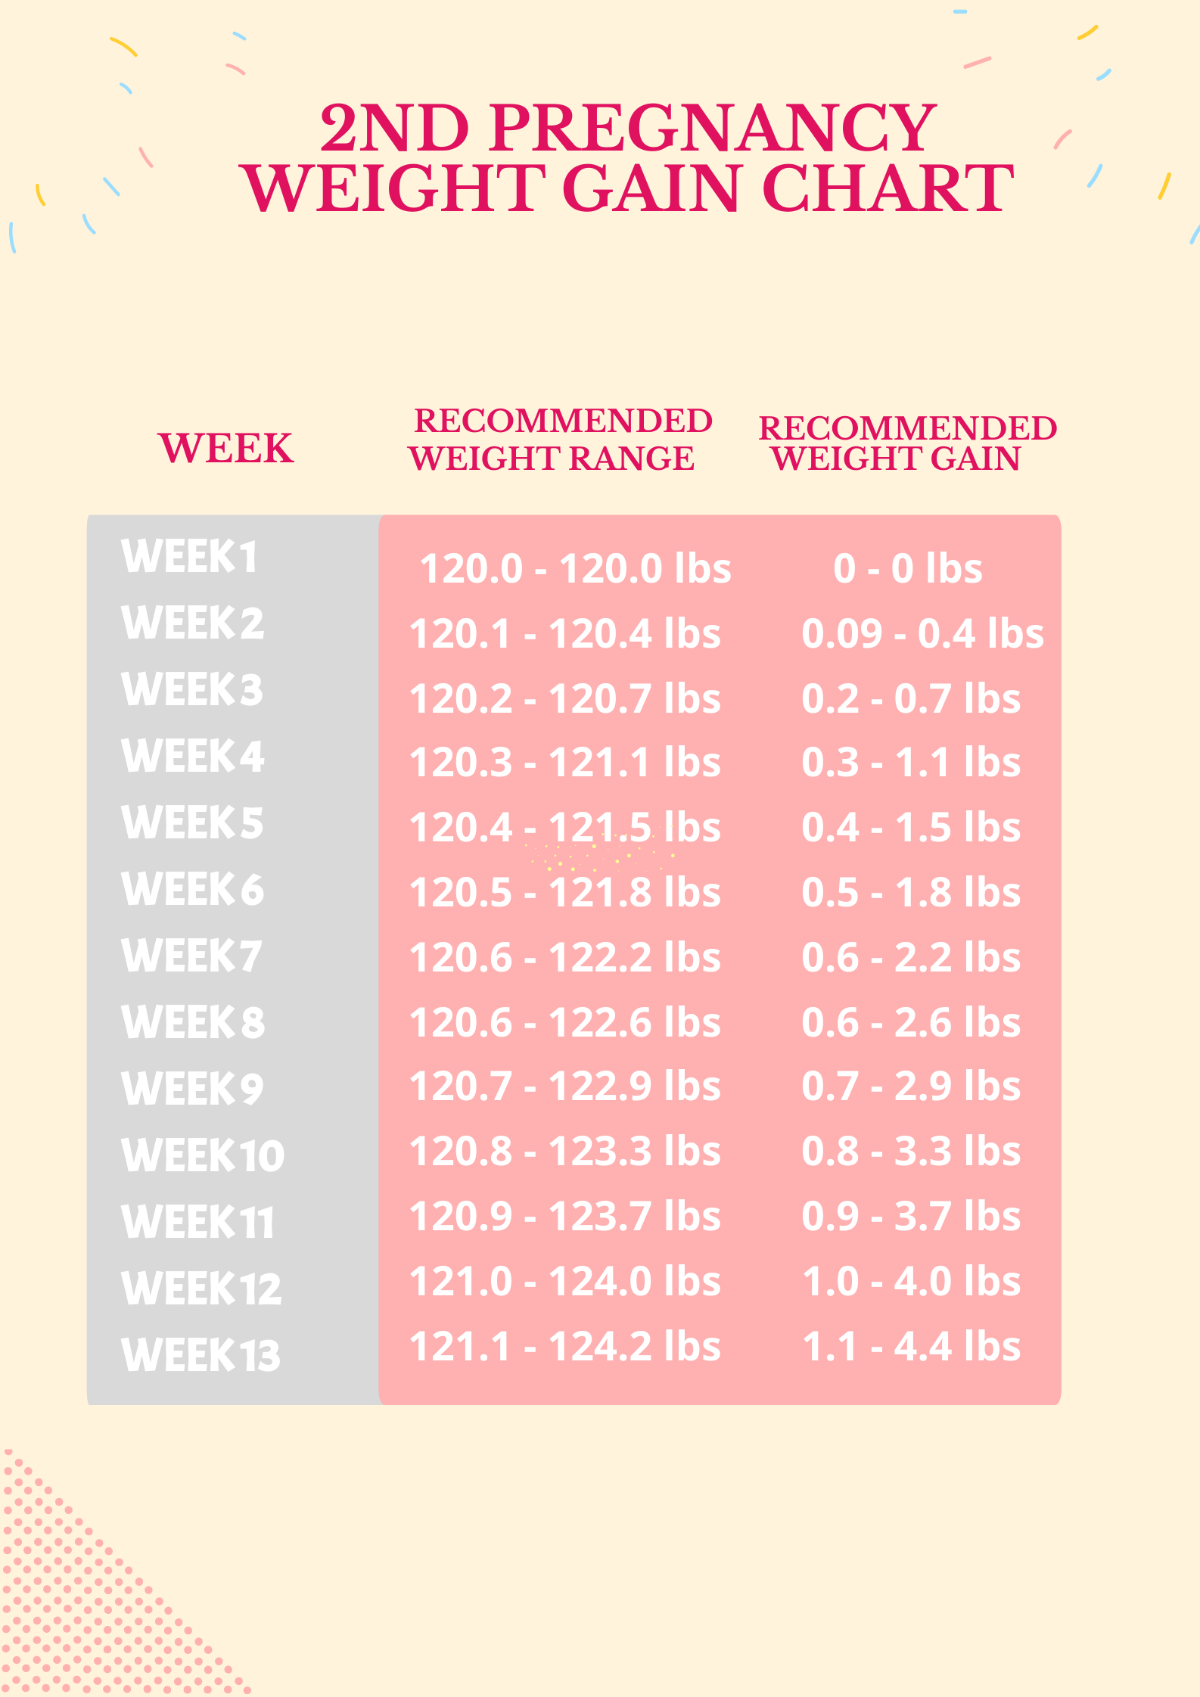 2nd Pregnancy Weight Gain Chart